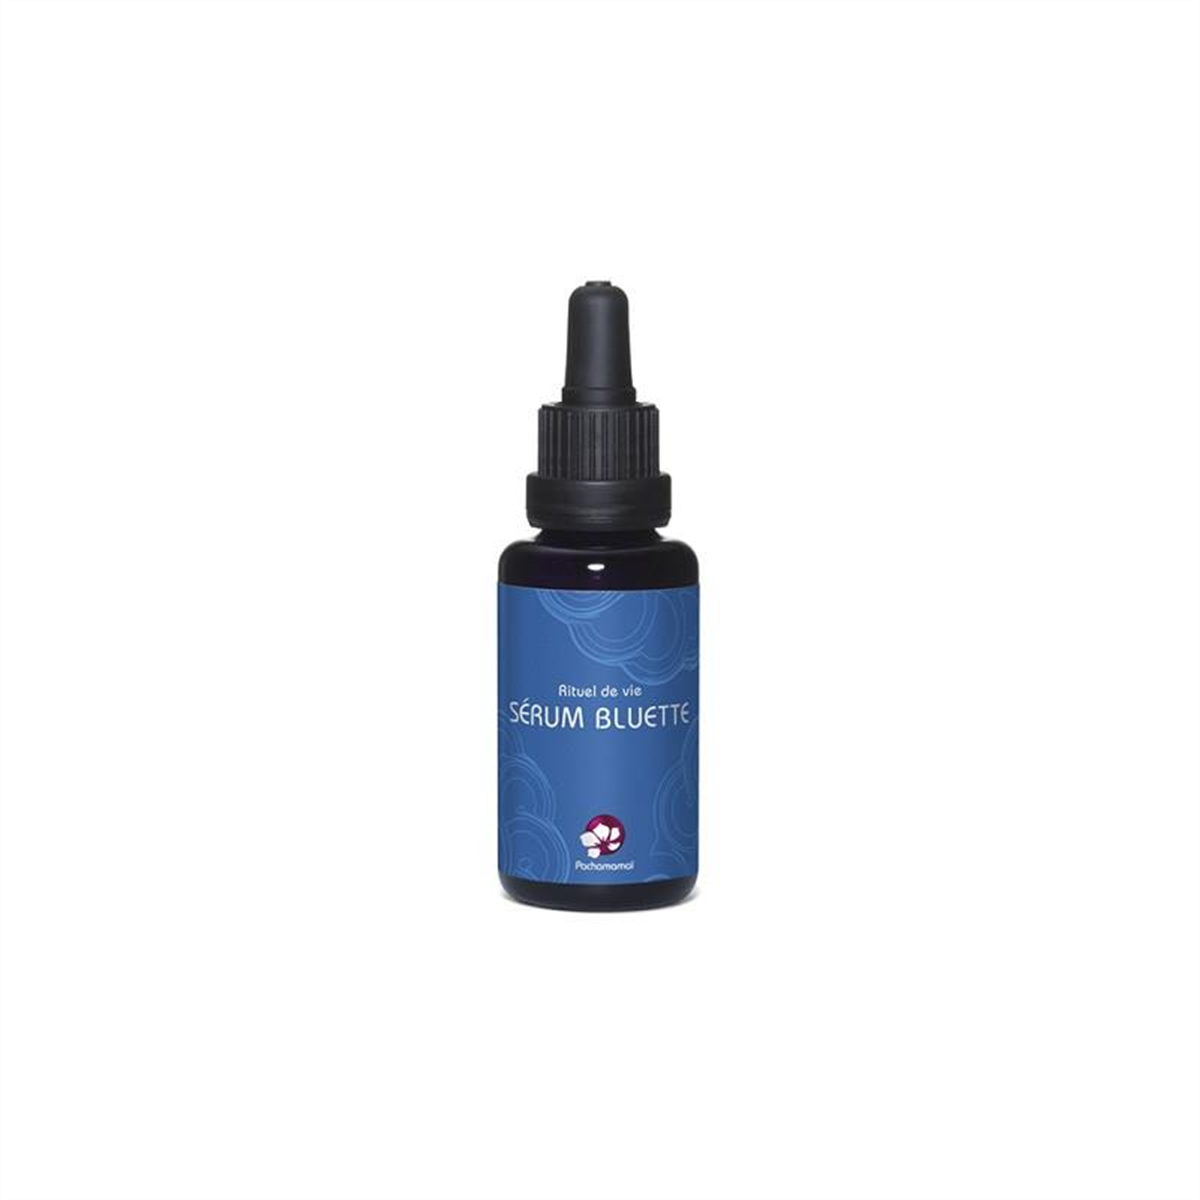 PACHAMAMAI - Bluette Serum, oily skin/imperfections